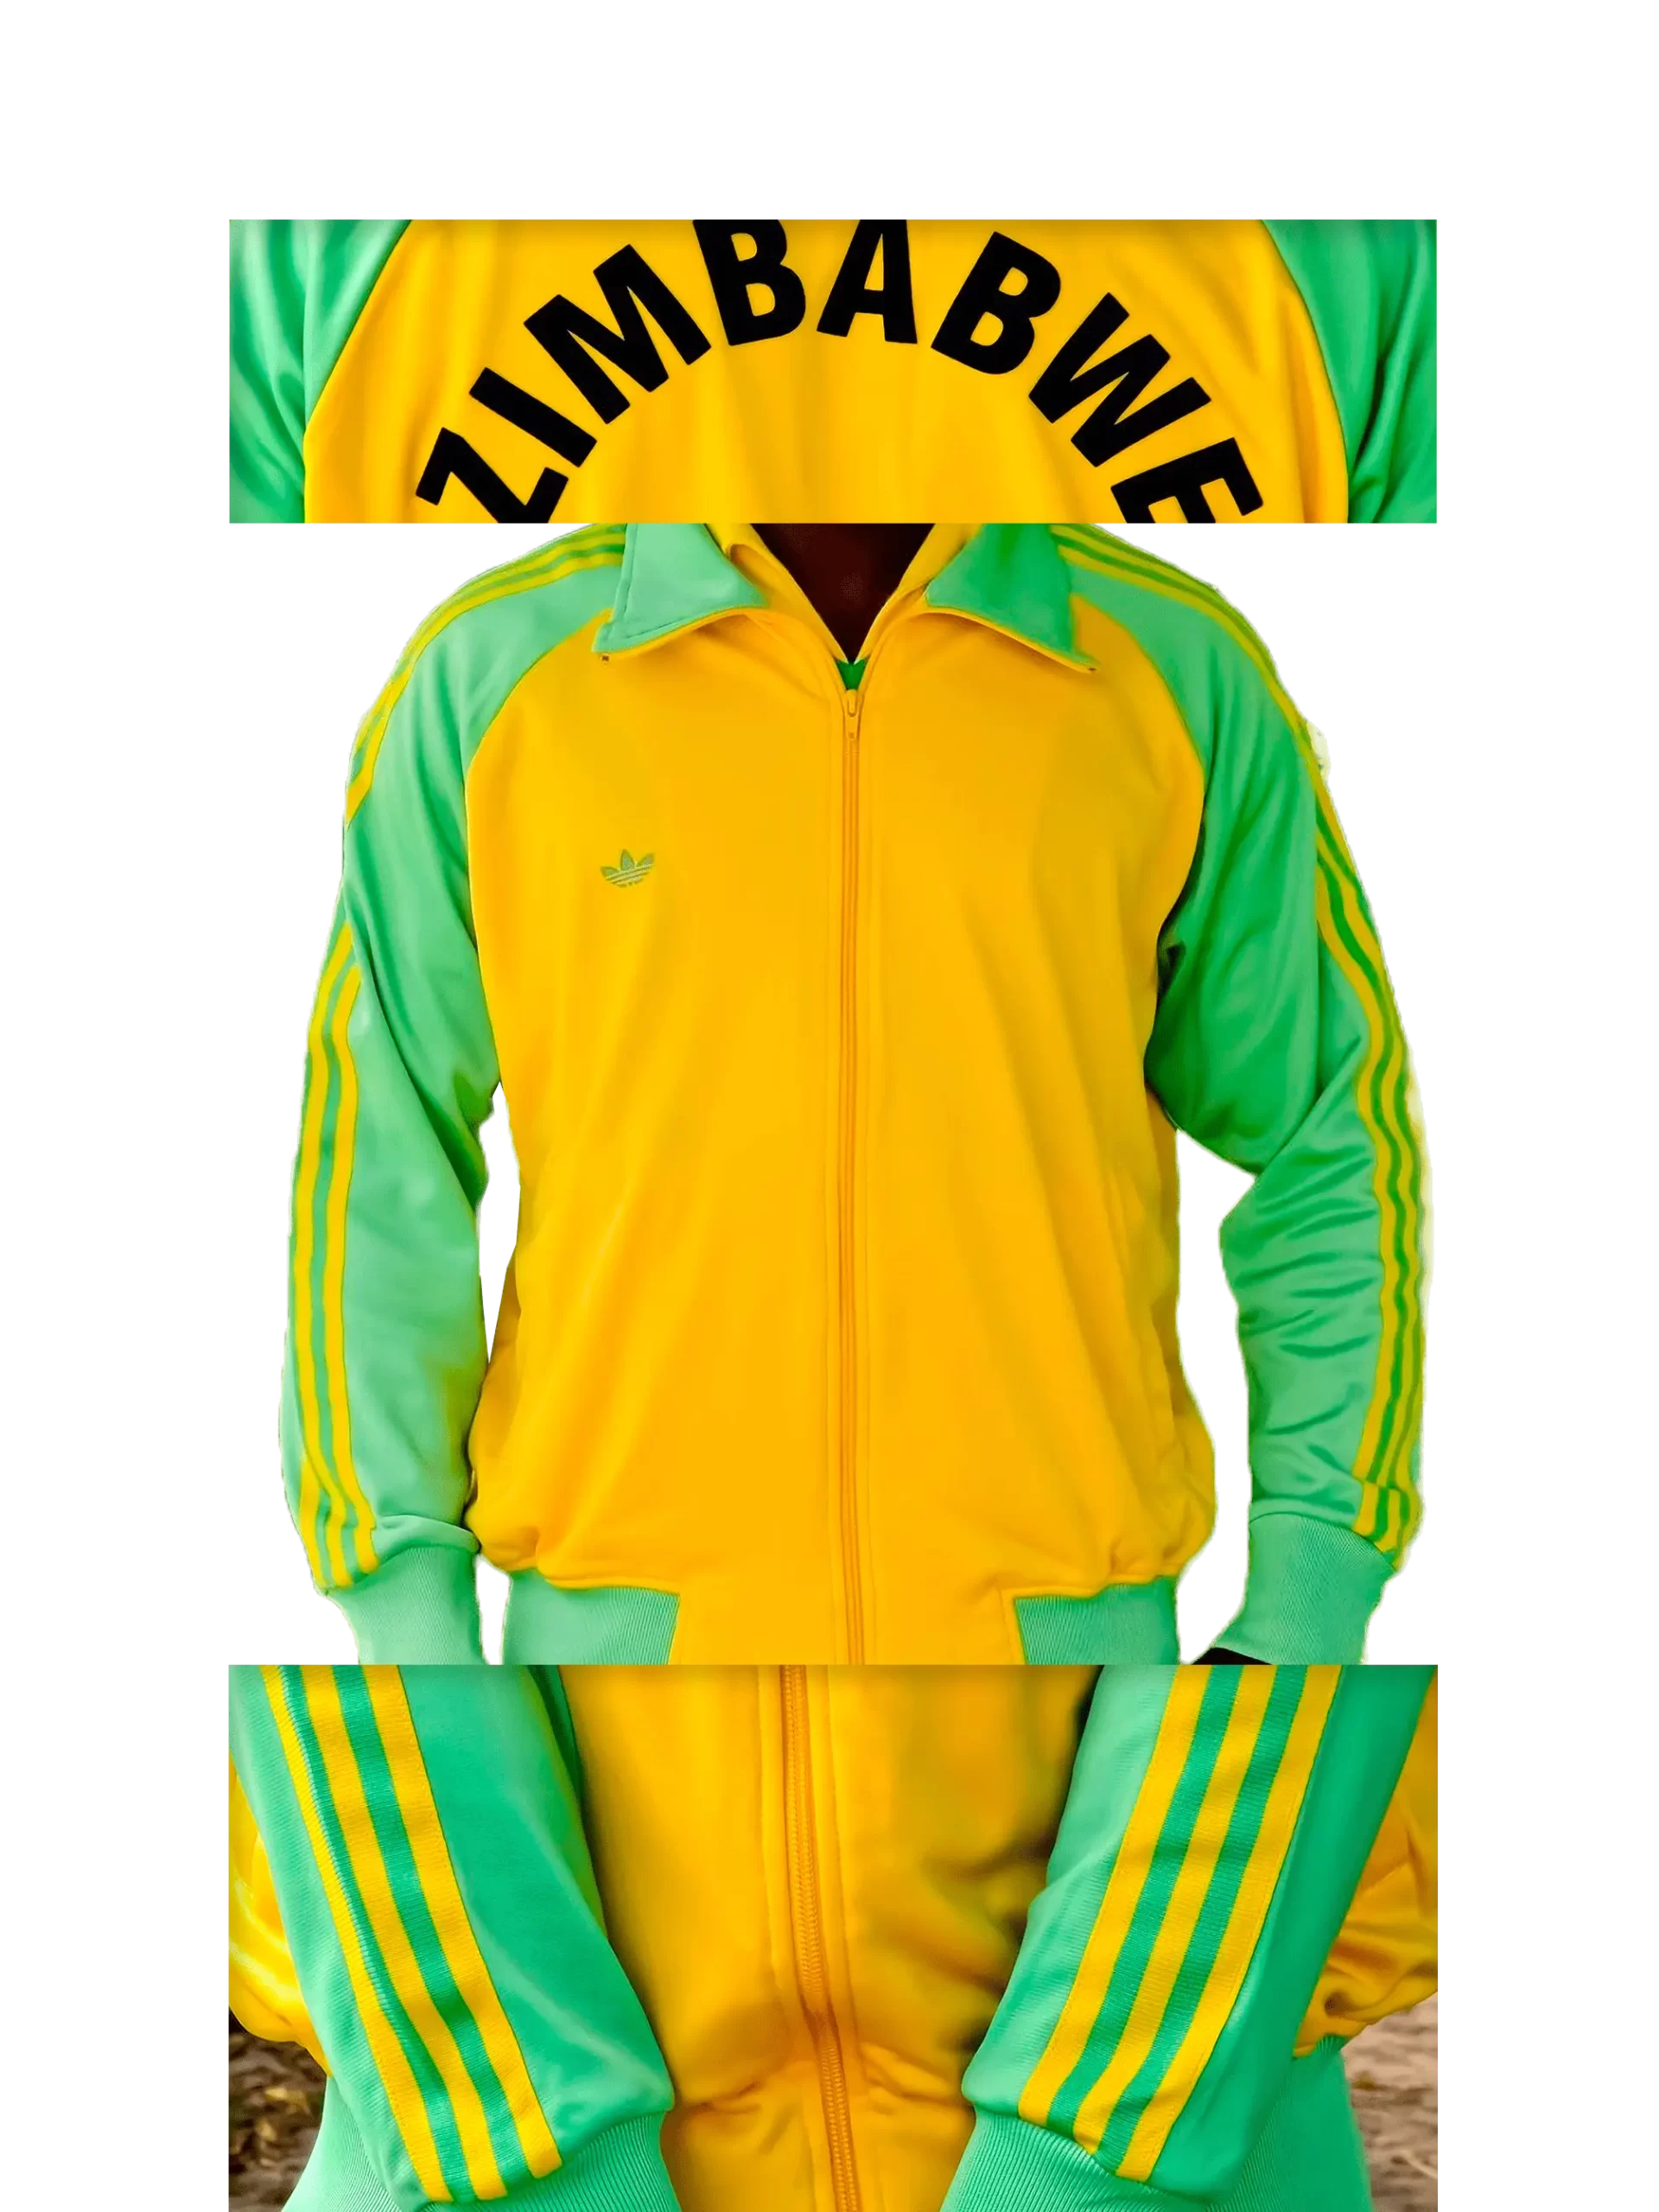 Men's 2003 Zimbabwe Track Top by Adidas: Indulgence (EnLawded.com file #lmchk81855ip2y125211kg9st)